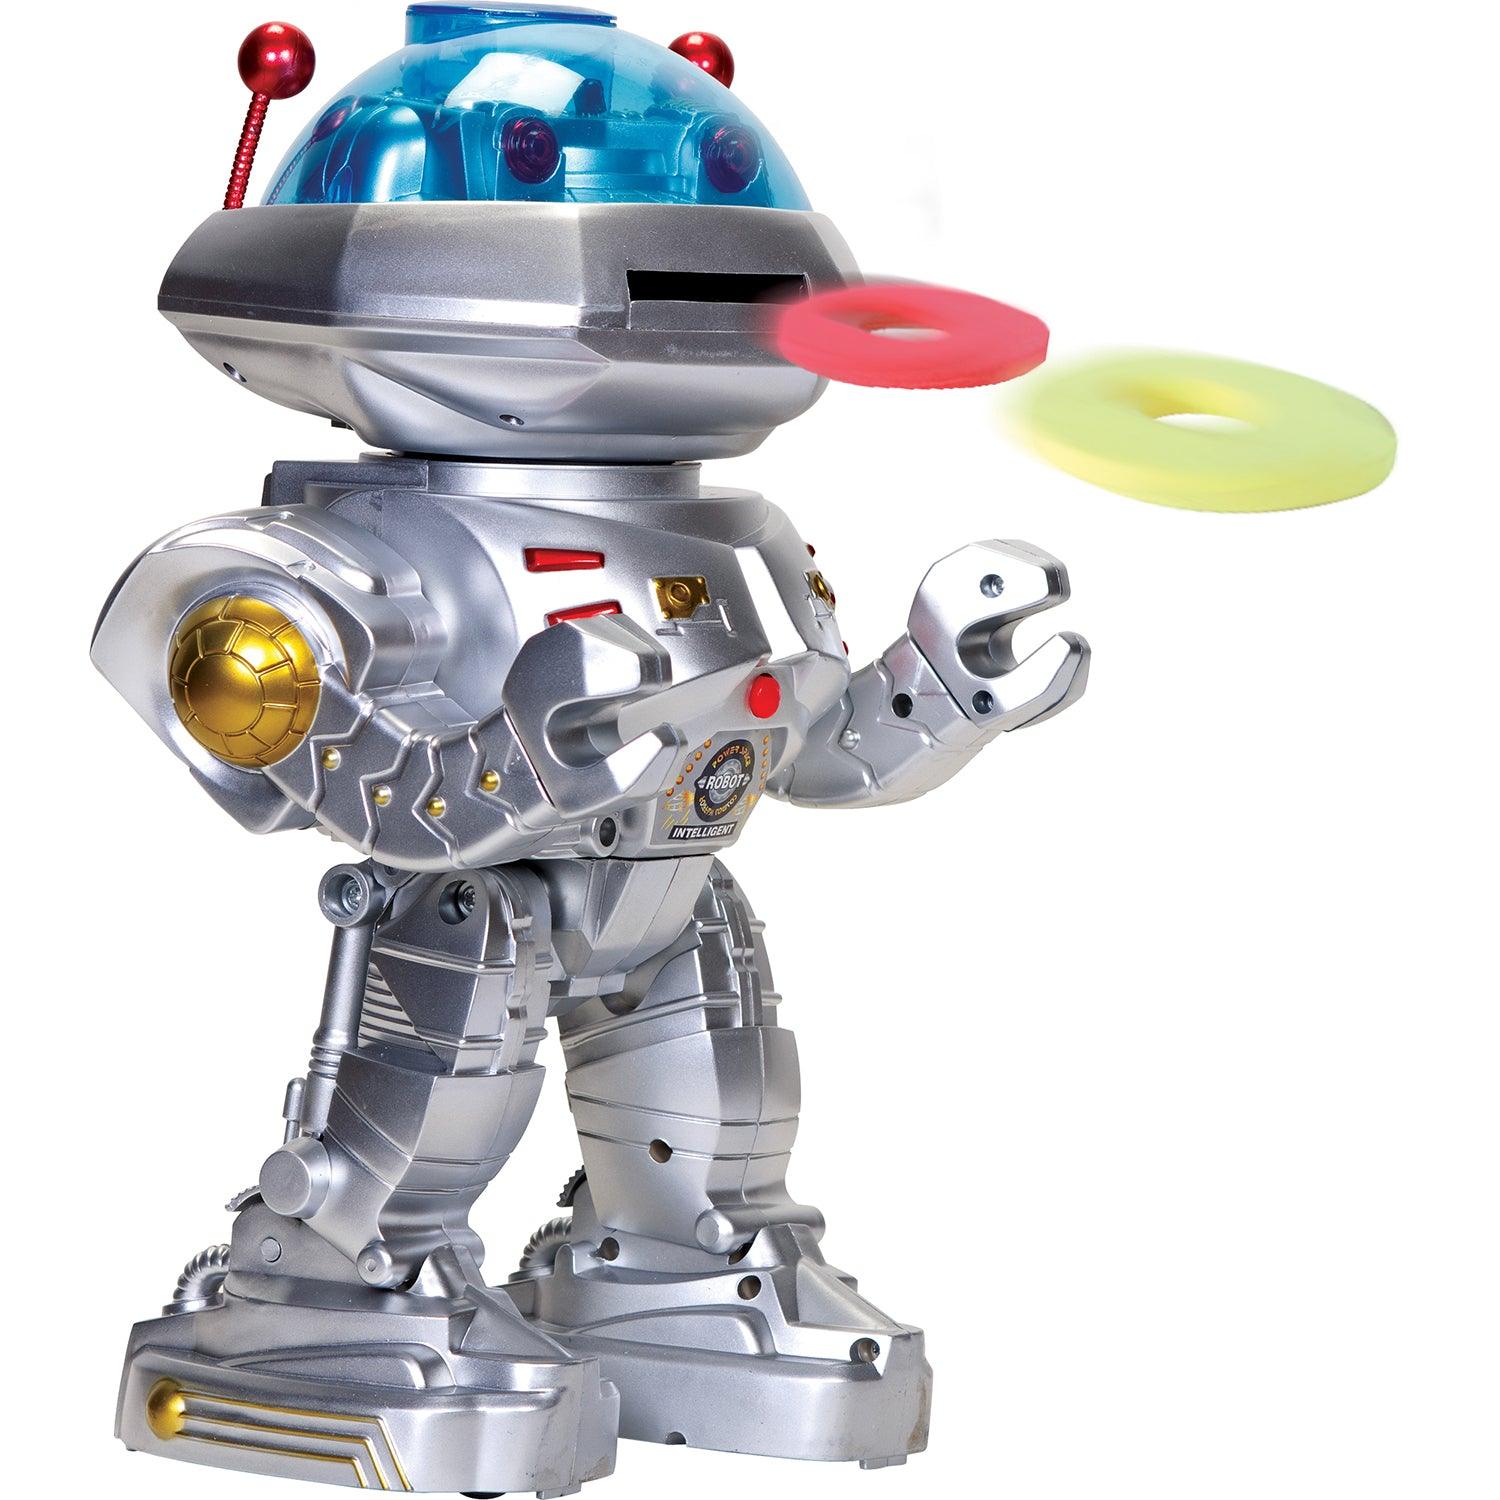 Zoom Spacebot 3000 - Robotics - Science Museum Shop